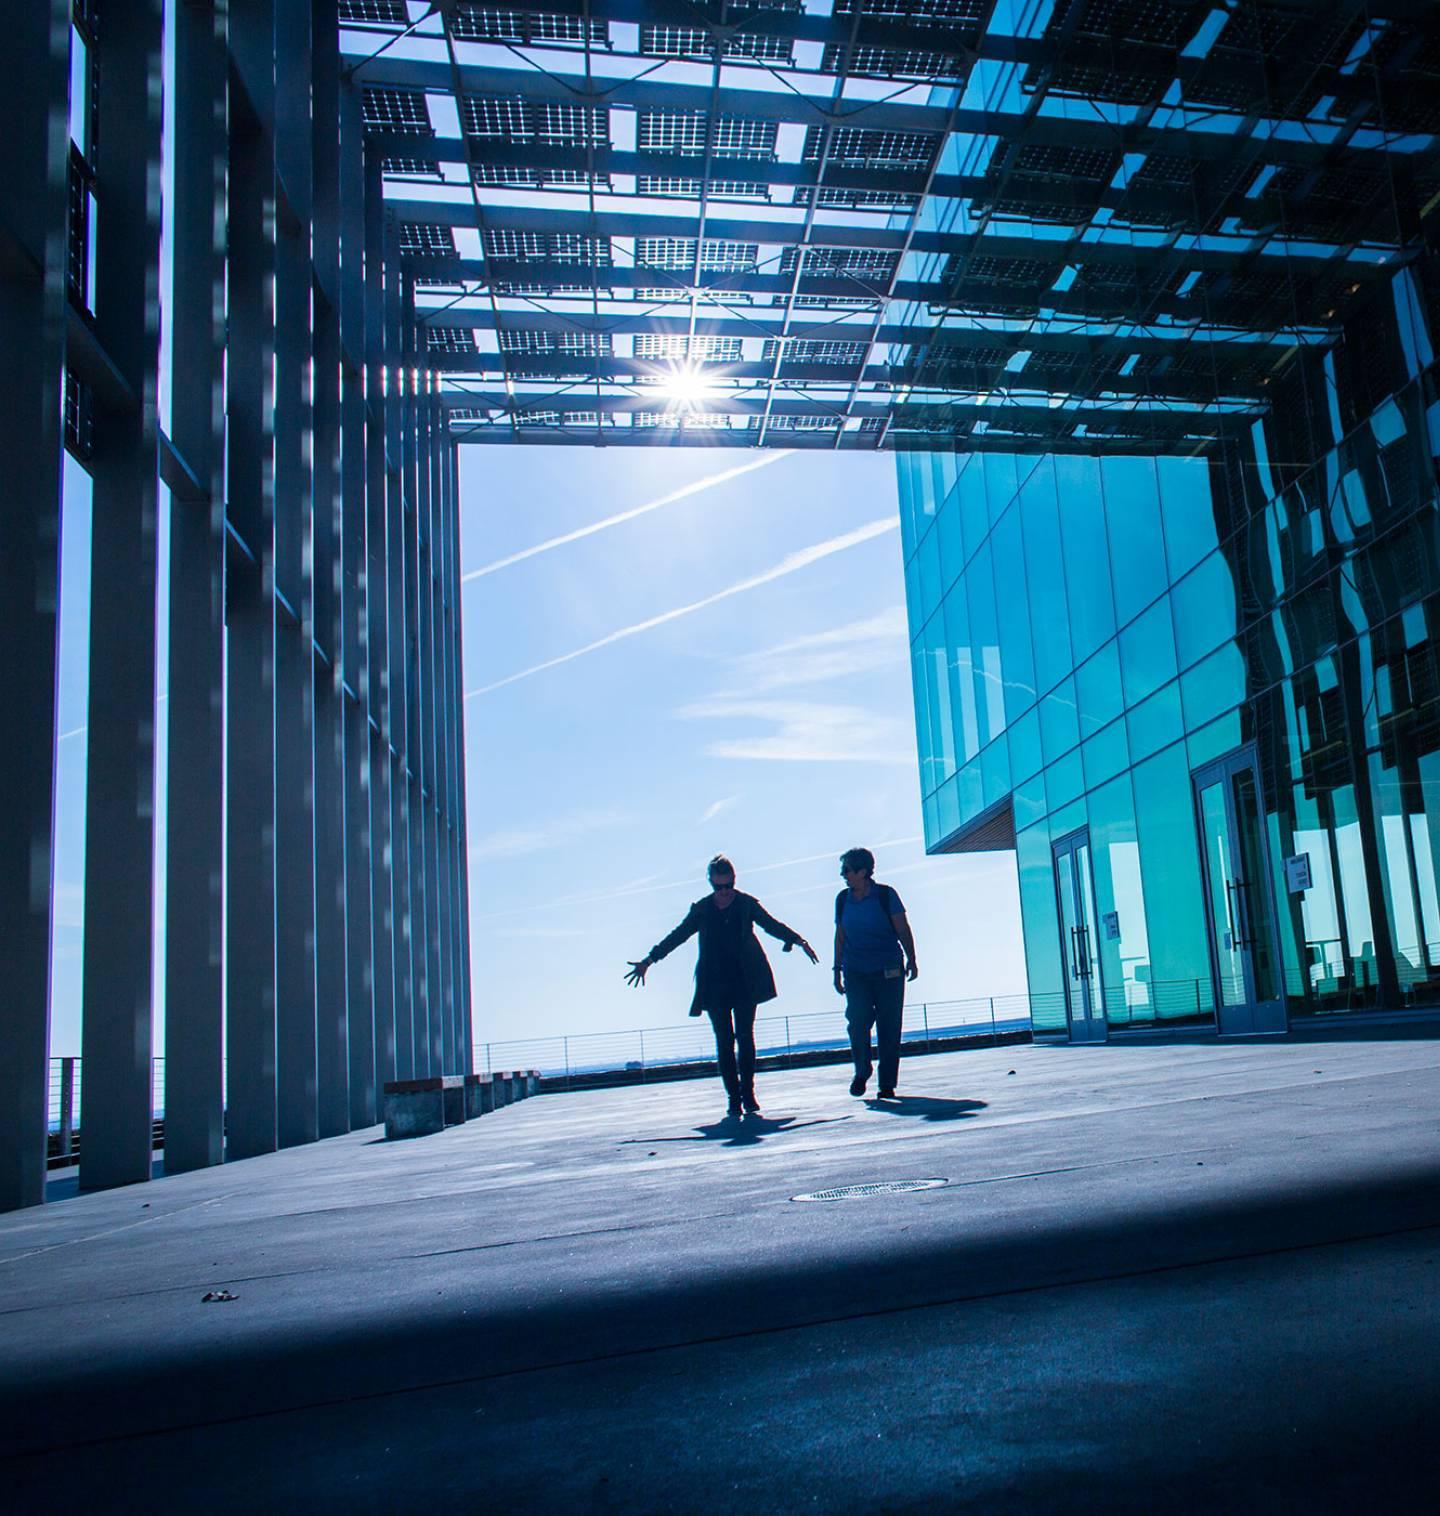 Two people walking through large hallway made of solar panels